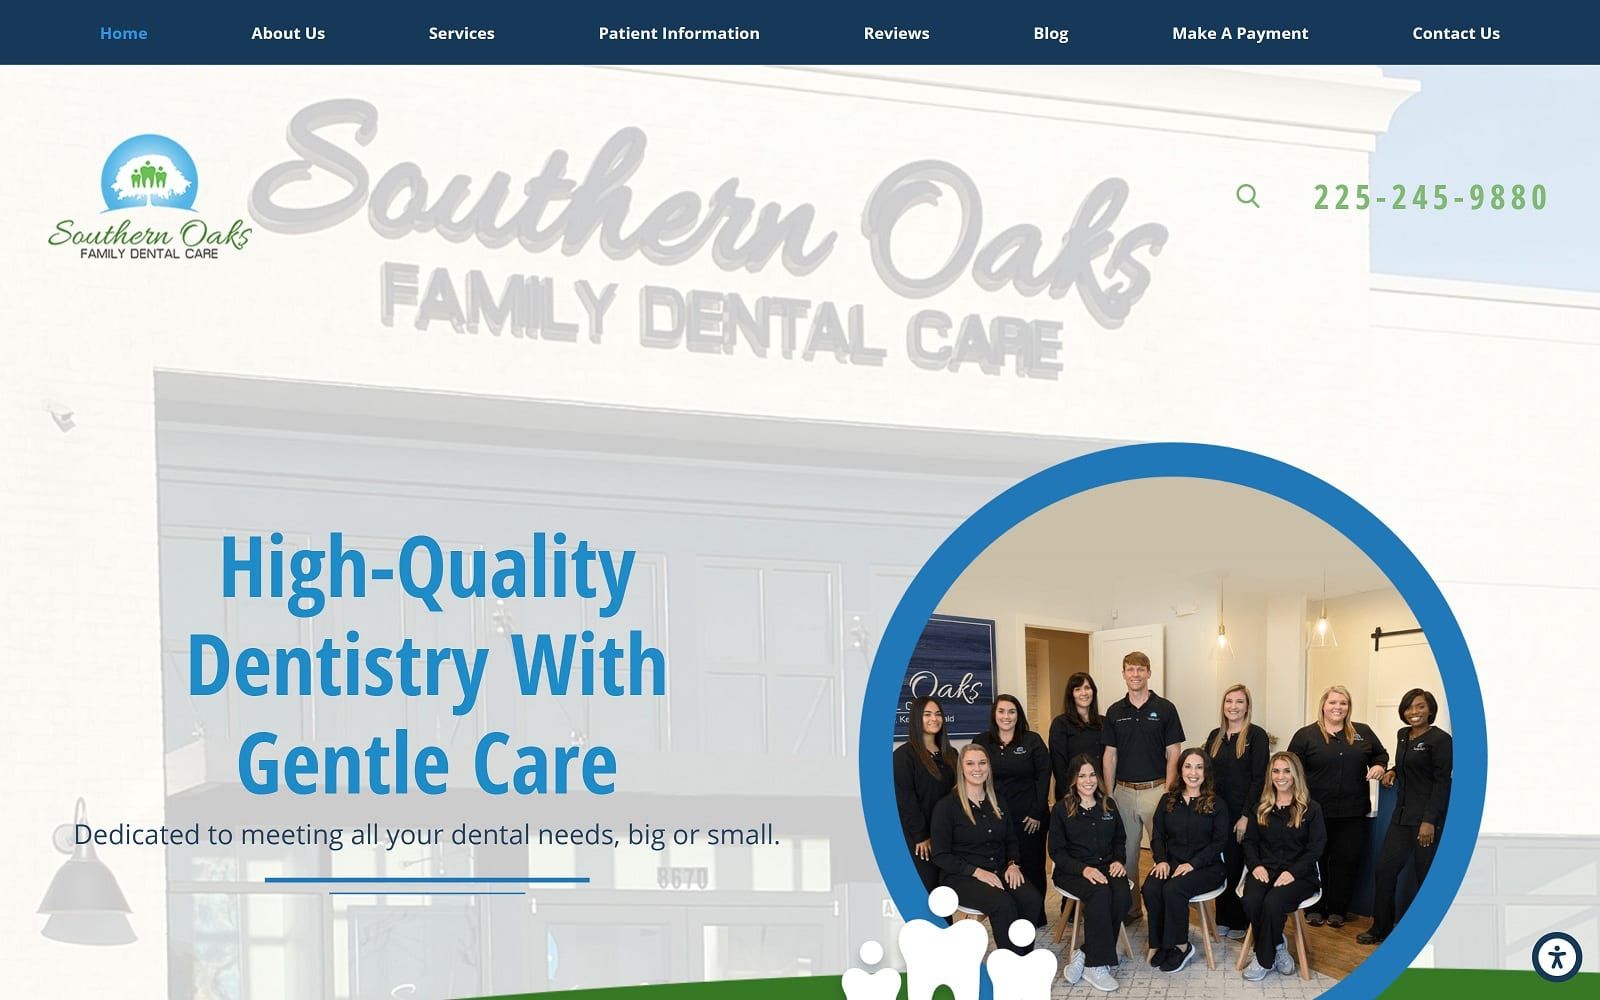 The screenshot of southern oaks family dental care southernoaksfamilydental. Com website